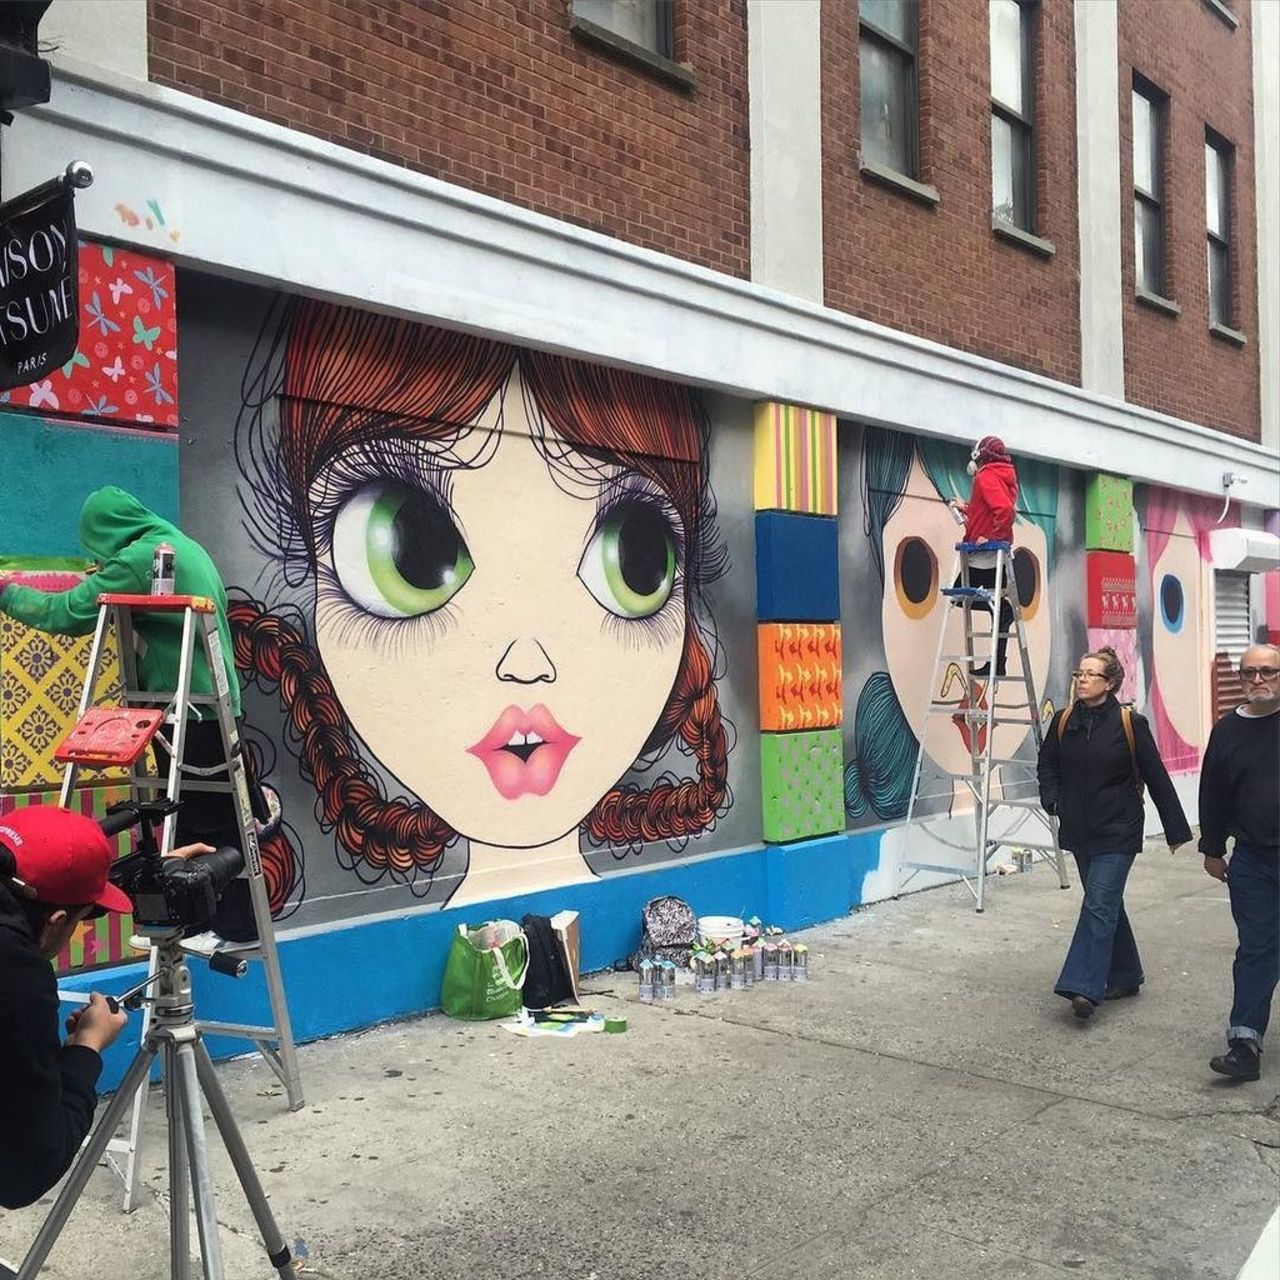 WIP 
Rivington Street NYC
#graff #graffiti #graffitinyc #outsider #outsiderart #street #streetart #streetartnyc #ny… https://t.co/5dF45MwbfR